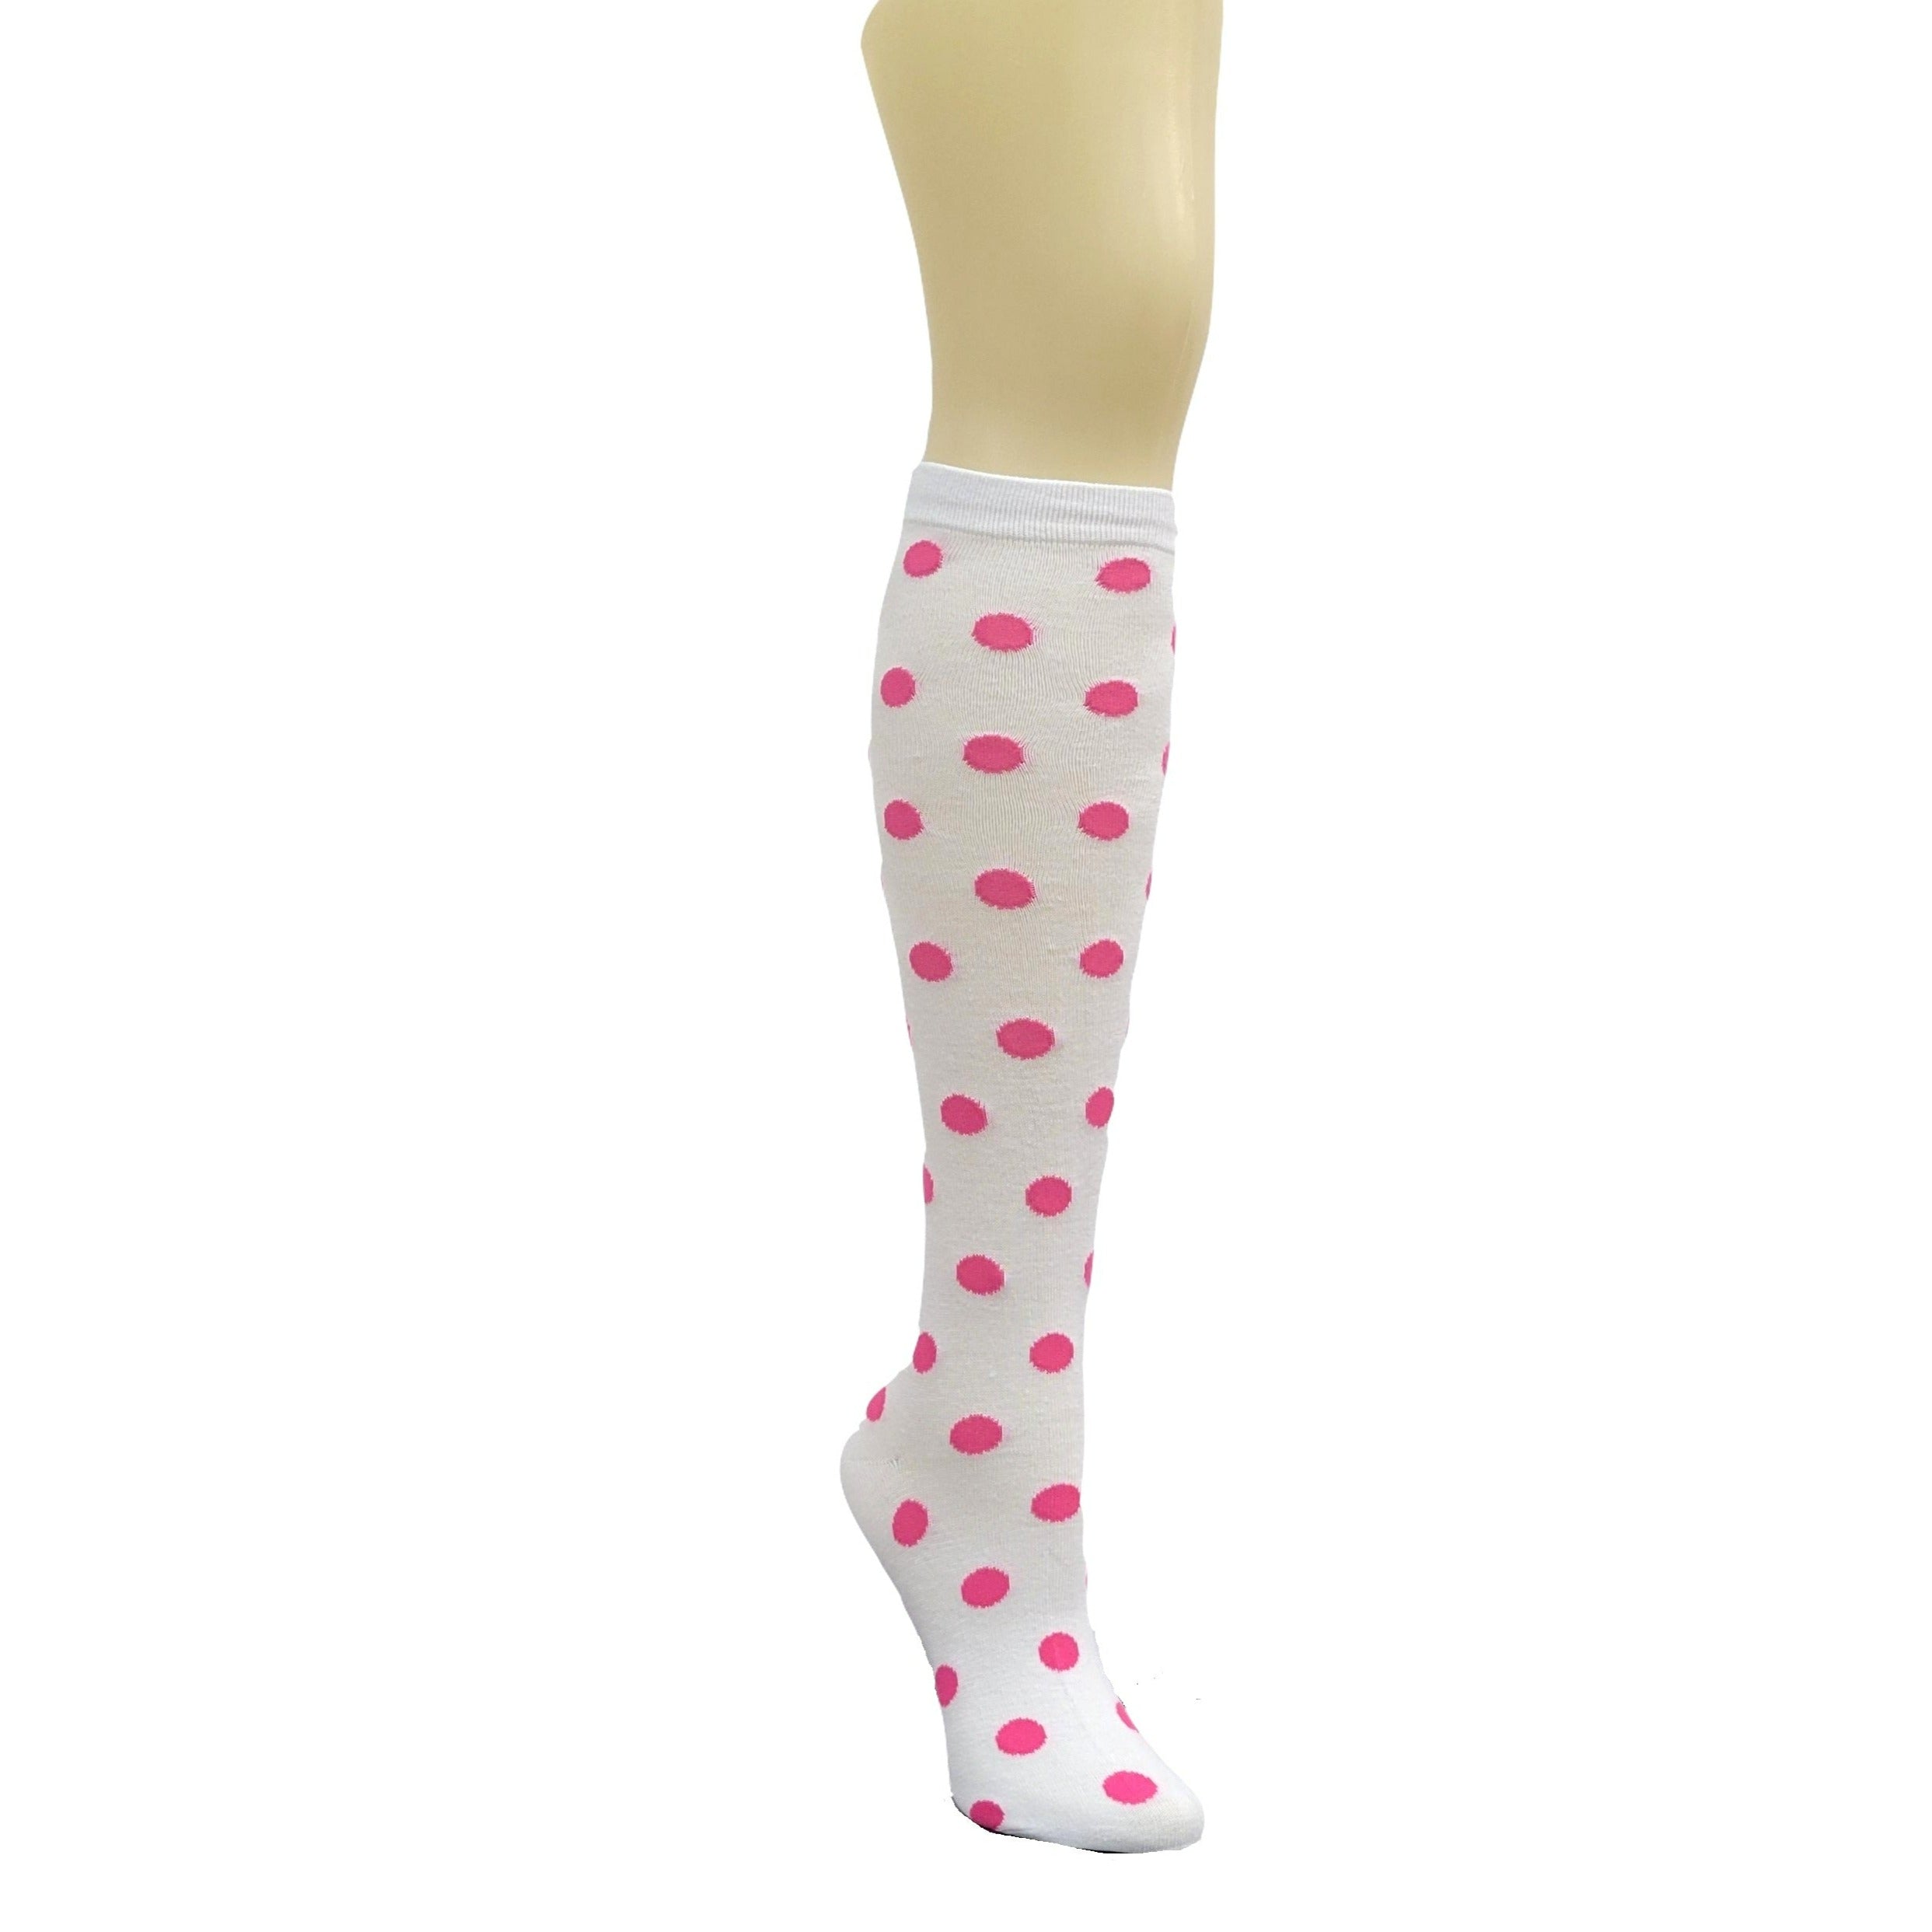 Colorful Polka Dot Pattern Socks from the Sock Panda (Knee High)